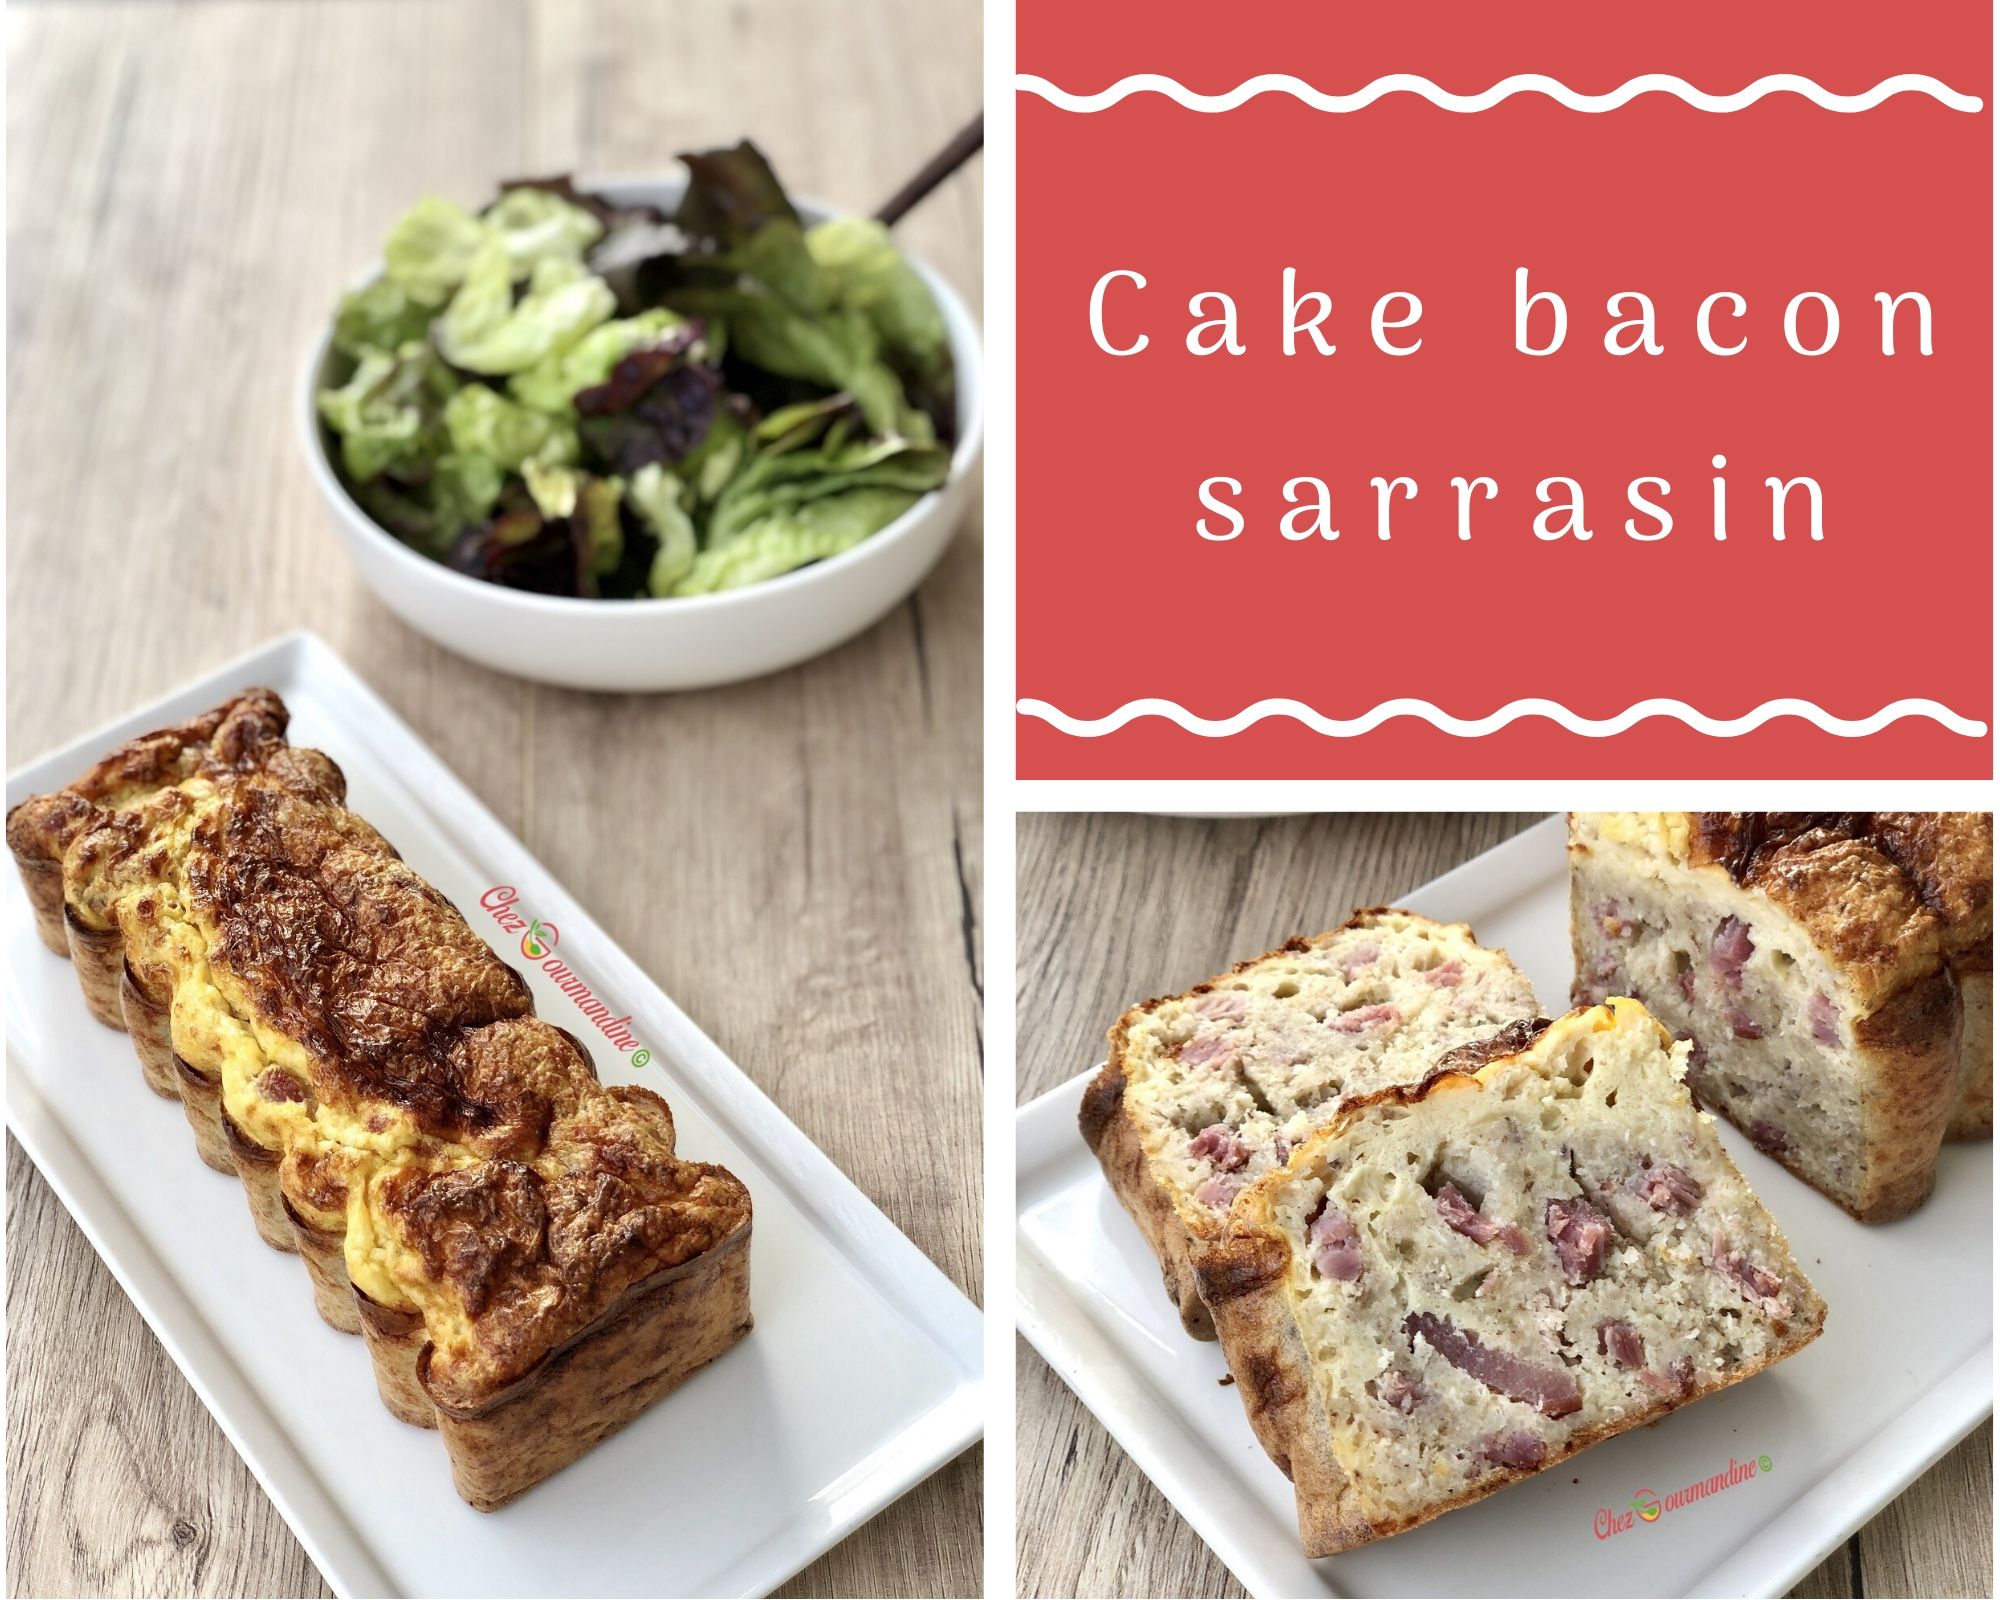 Cake bacon sarrasin